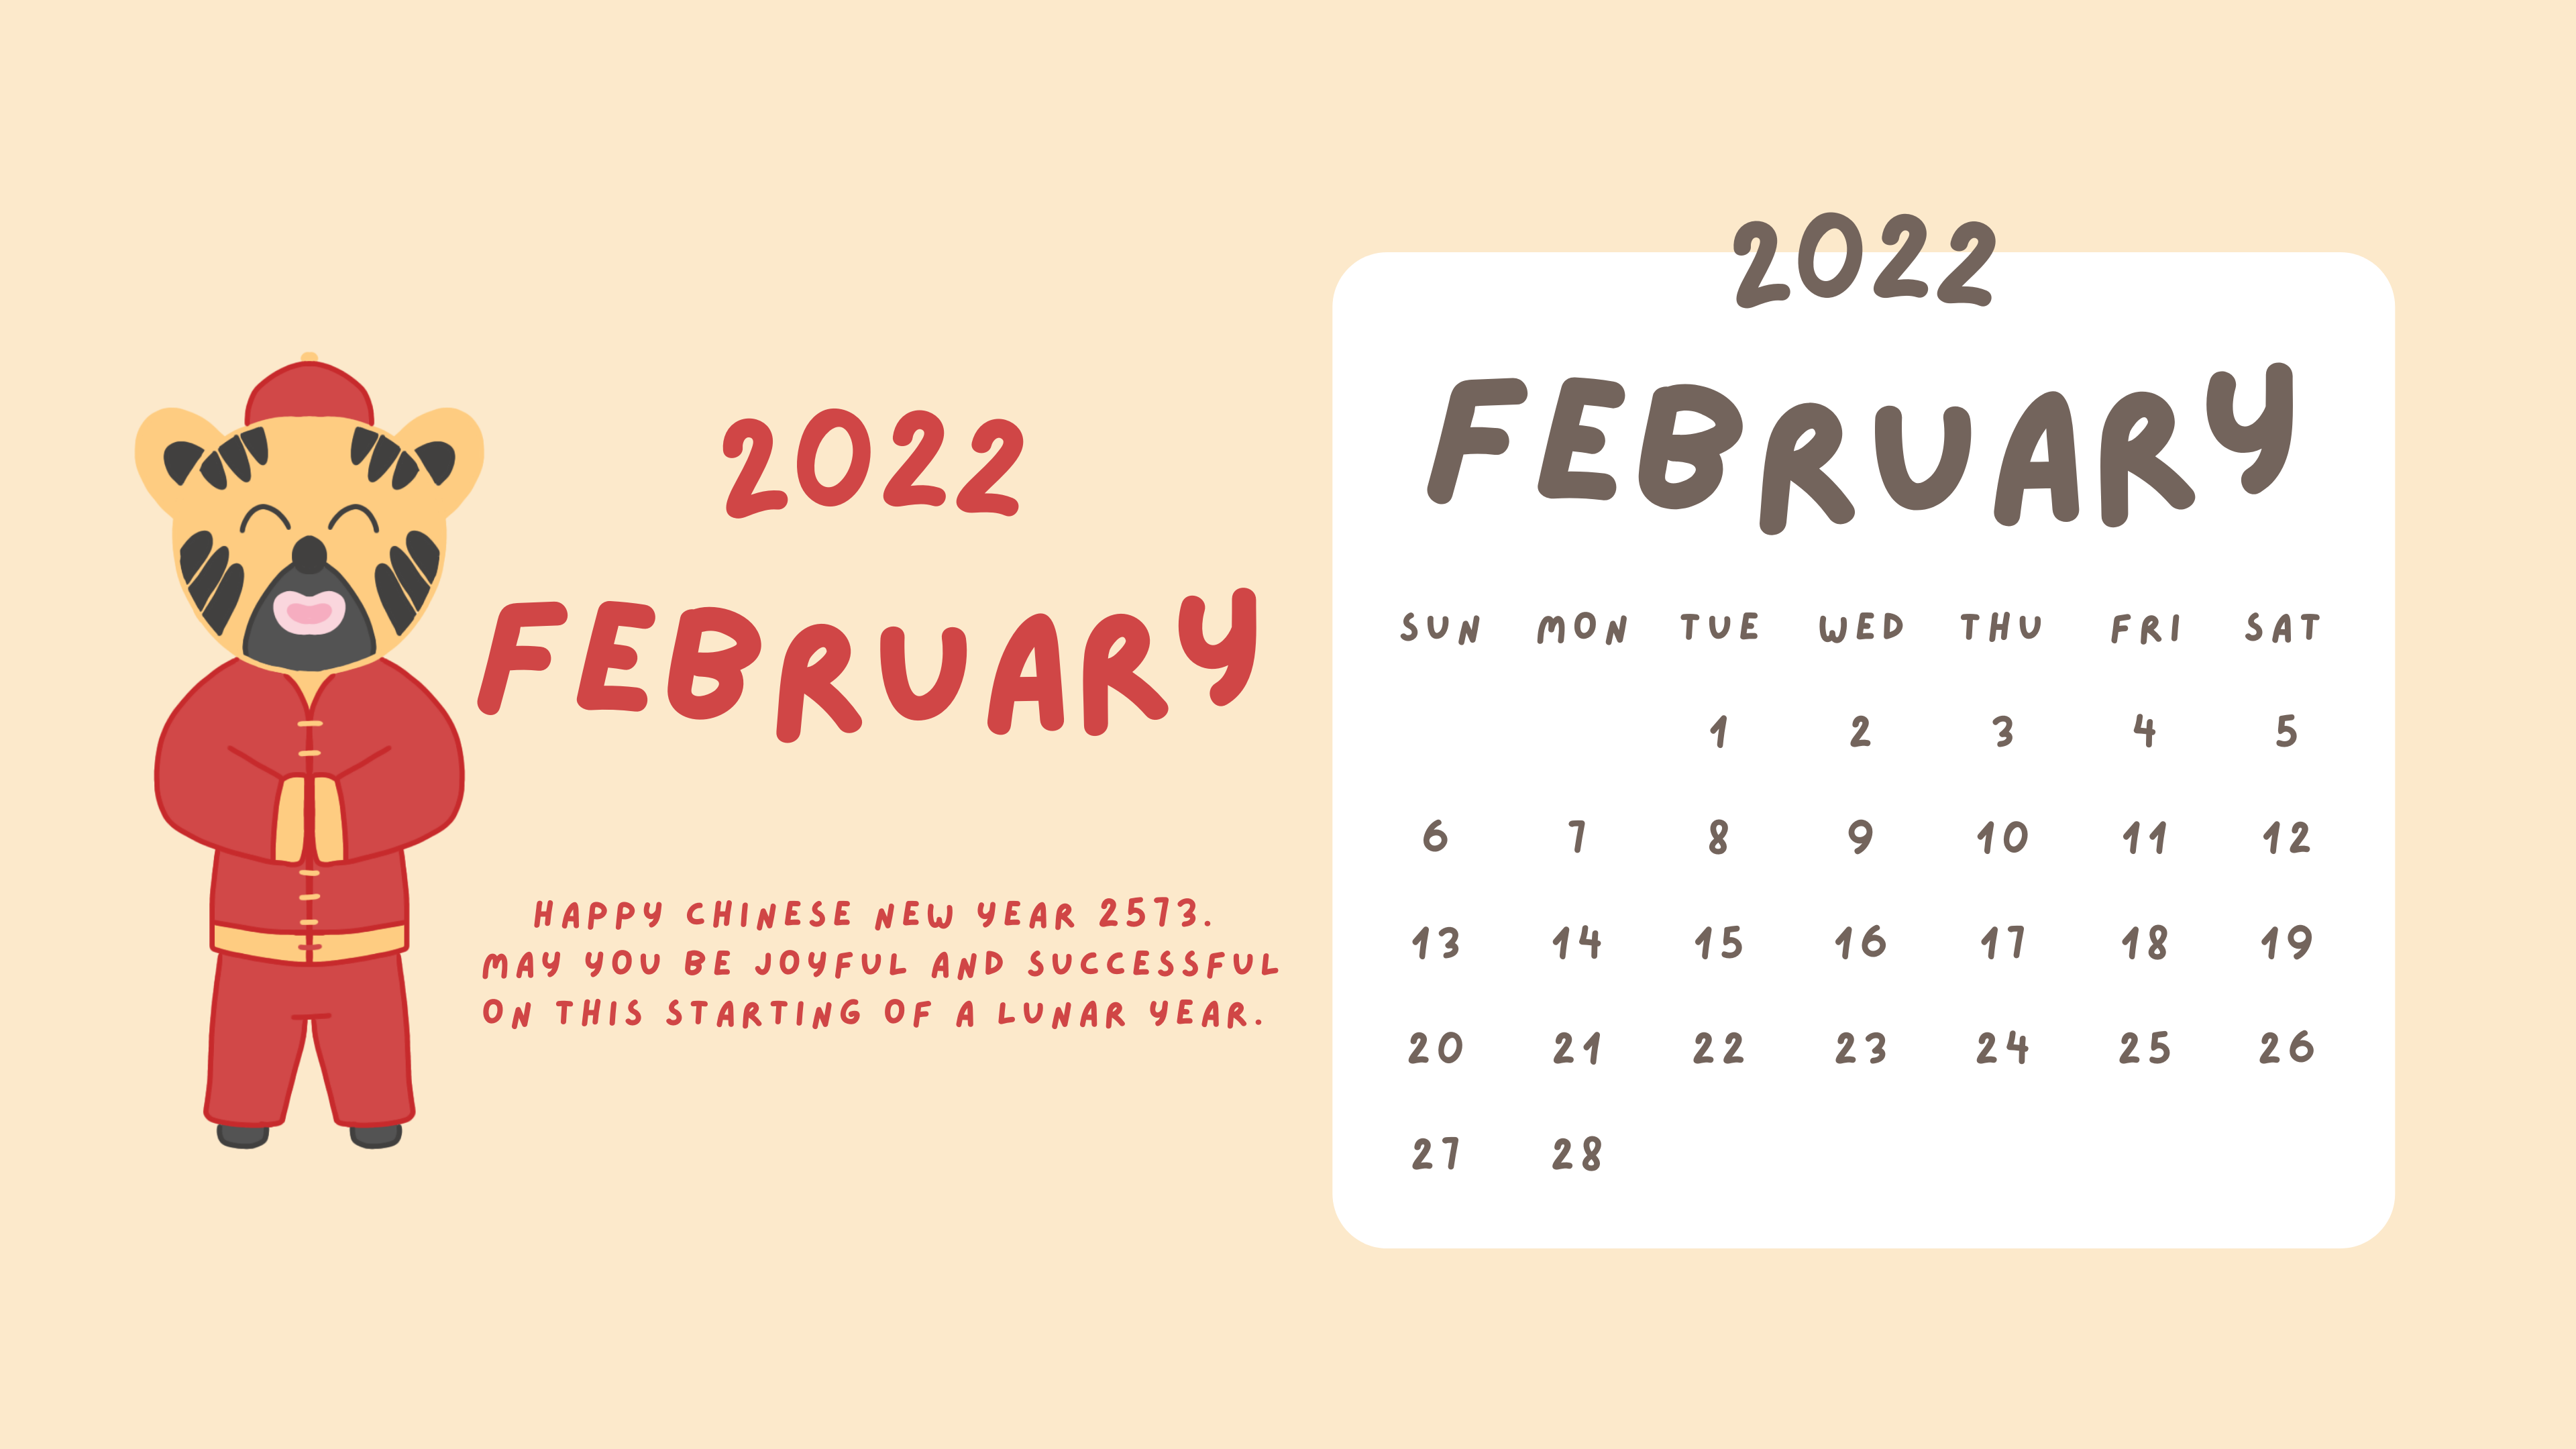 ivoci - Free Download: February 2022 Calendar Desktop Wallpapers - 5